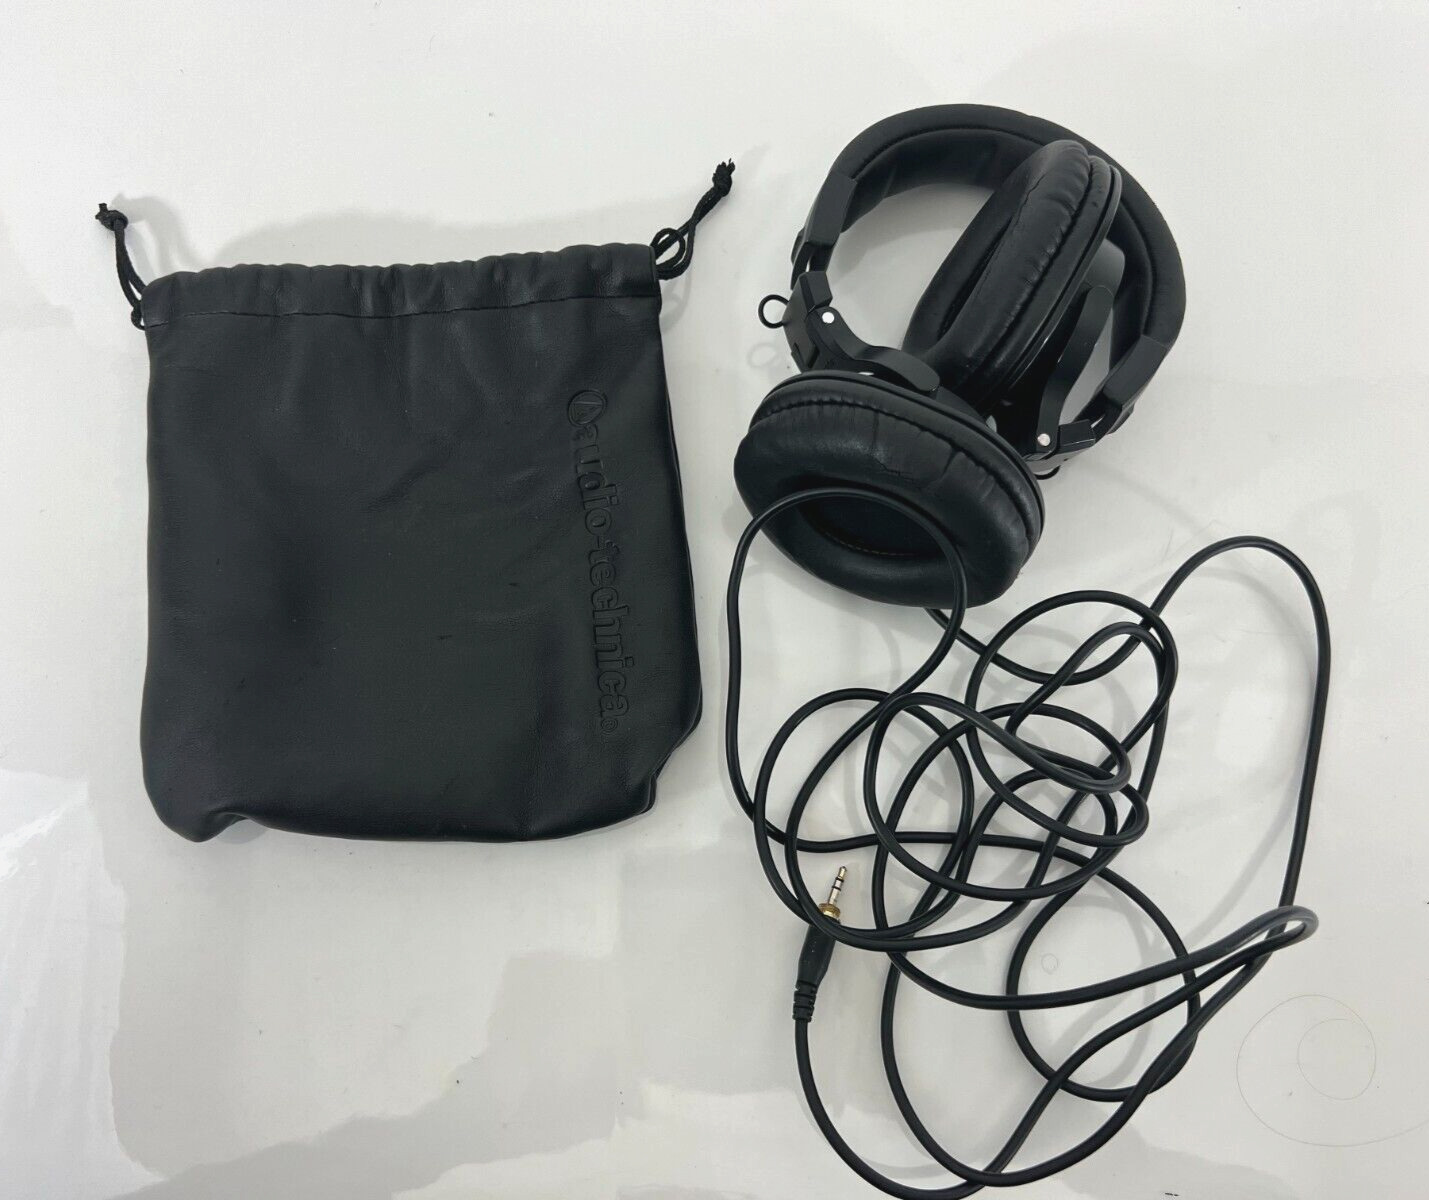 Audio-Technica ATH-M30x Professional Studio Monitor Headphones - Needs New Foams